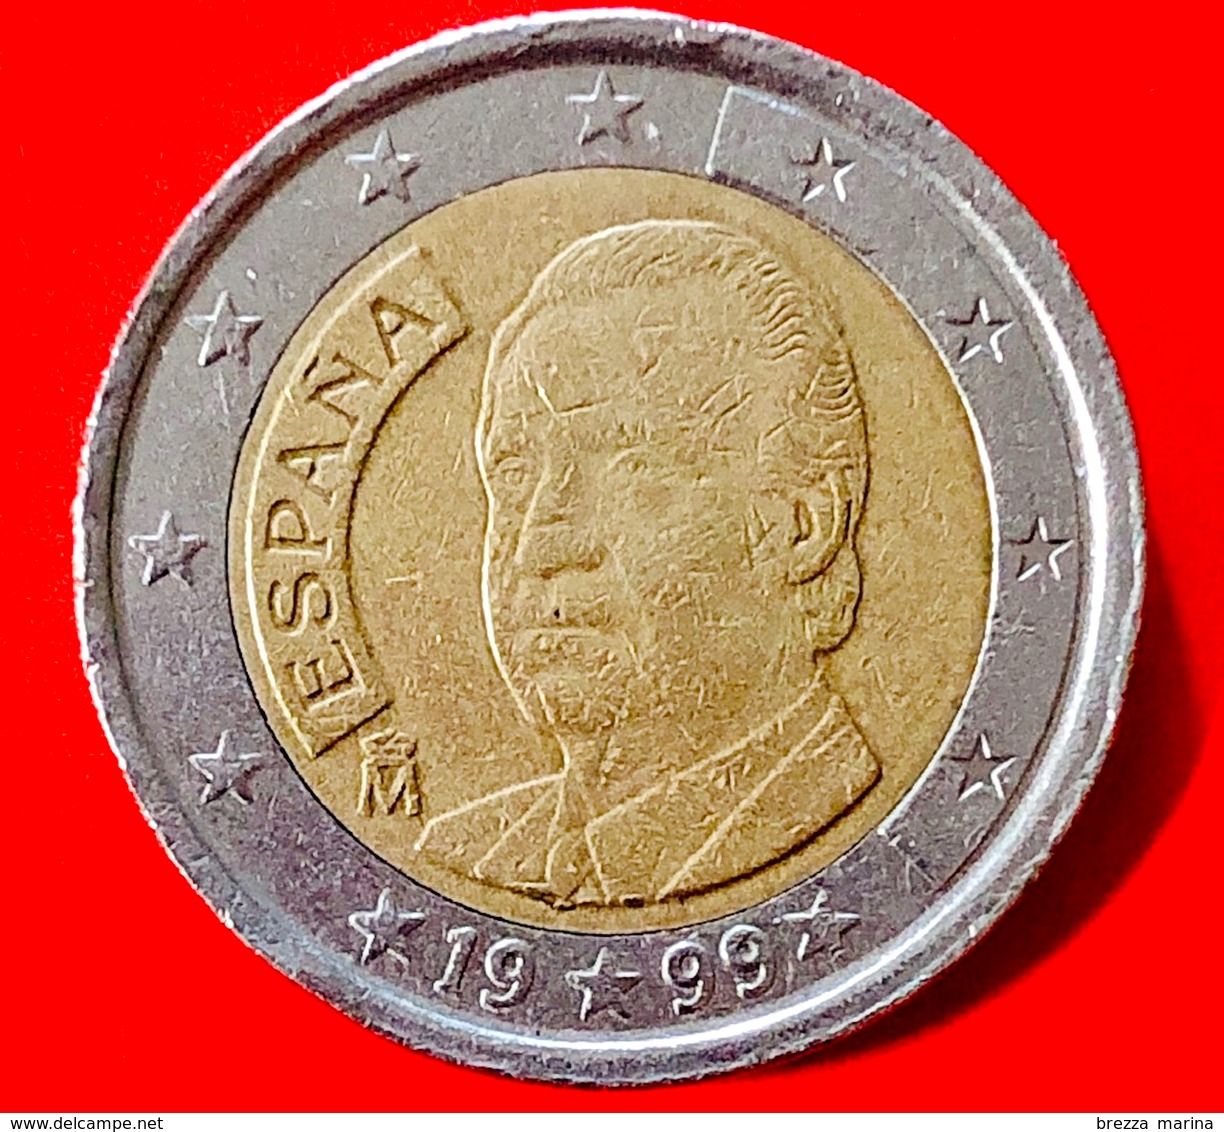 SPAGNA - 1999 - Moneta - Re Juan Carlos - Ritratto - Euro - 2.00 - Slovenia